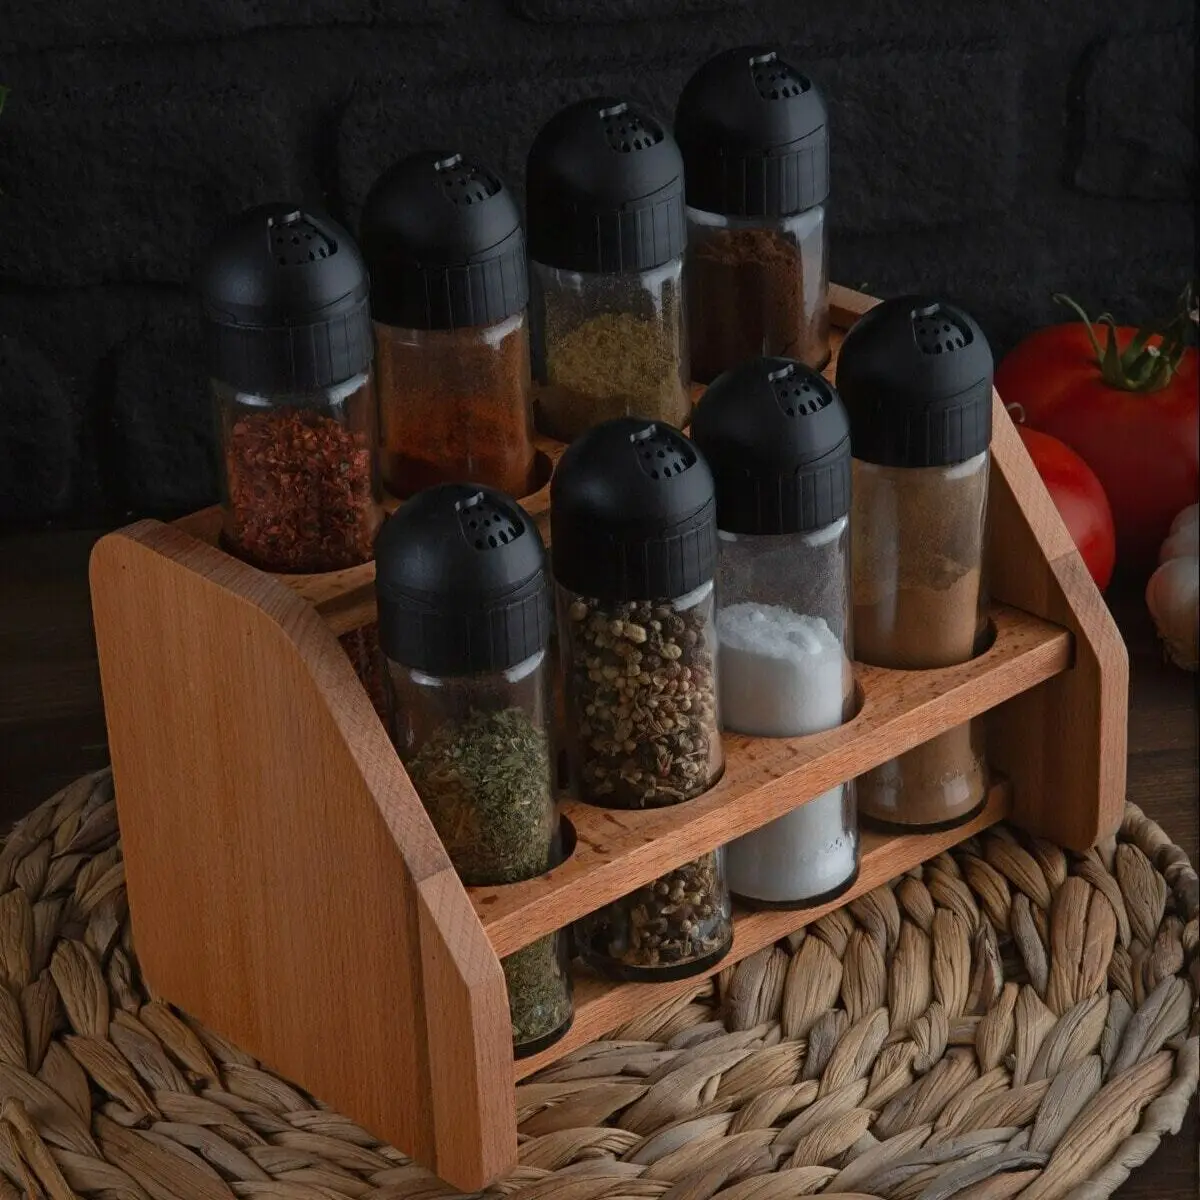 Black Cap 8'li Spice Rack Set wooden stand glass special design kullanıuşlı organizer kitchen 2021 popular salt and düğer spice